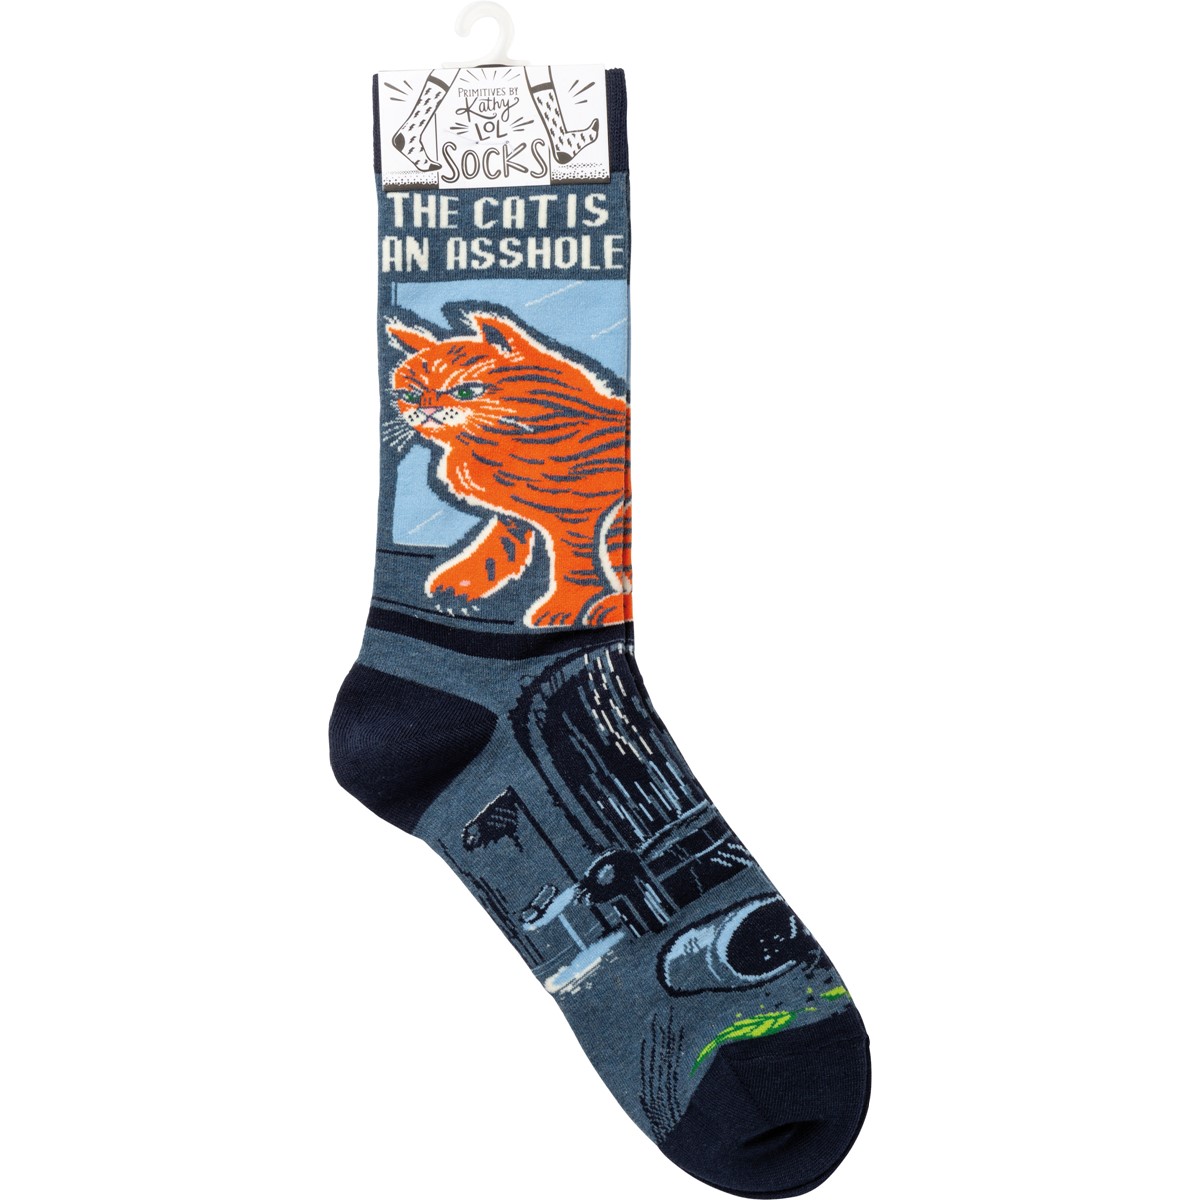 The Cat Socks - Cotton, Nylon, Spandex